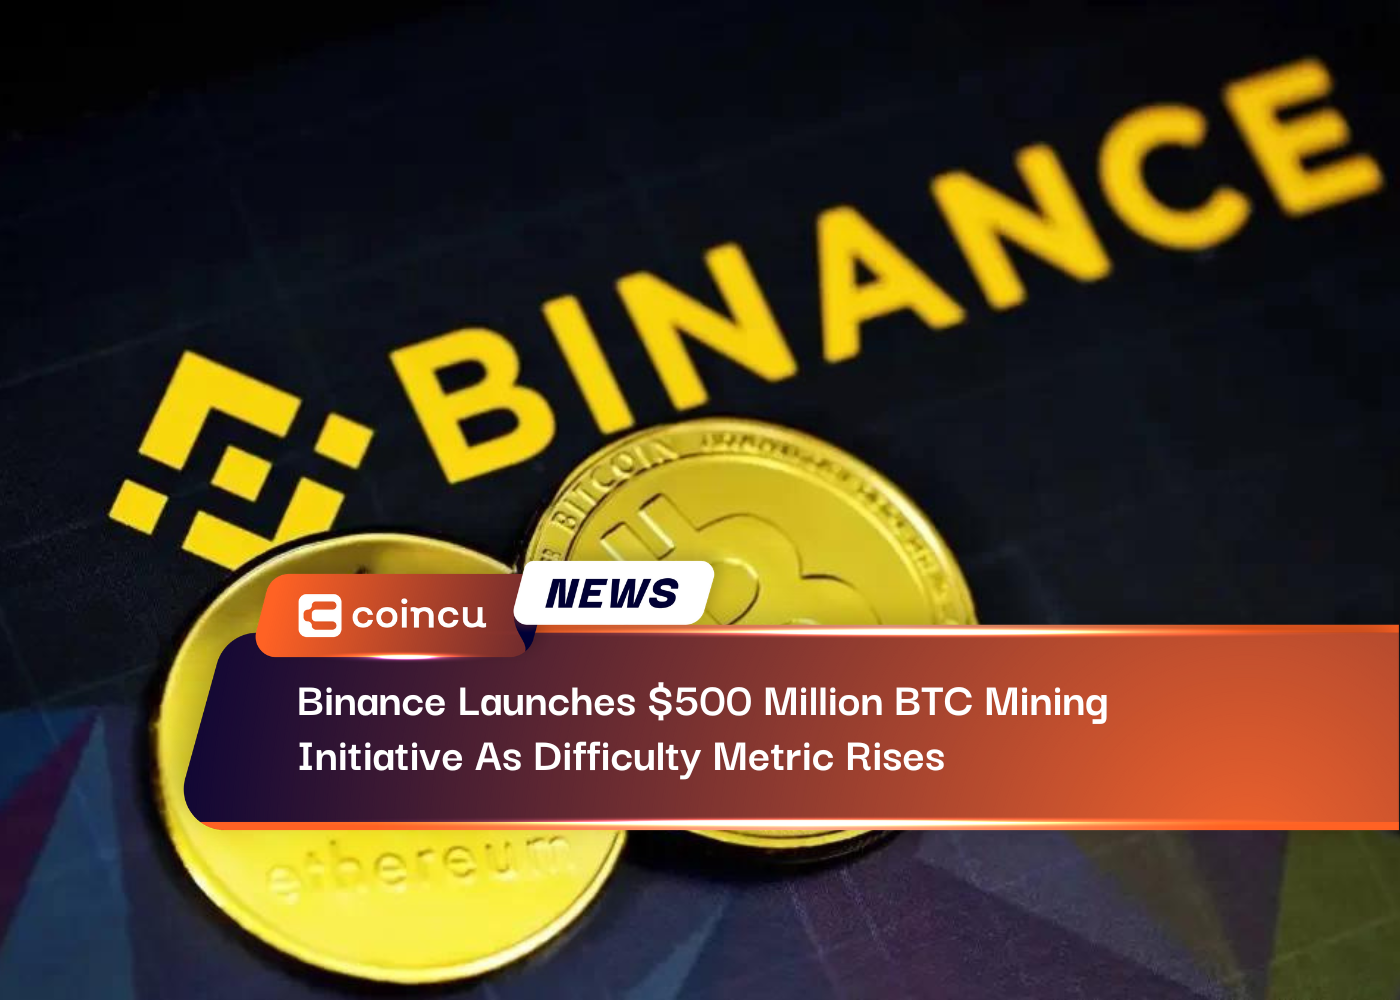 Binance Launches 500 Million BTC Mining